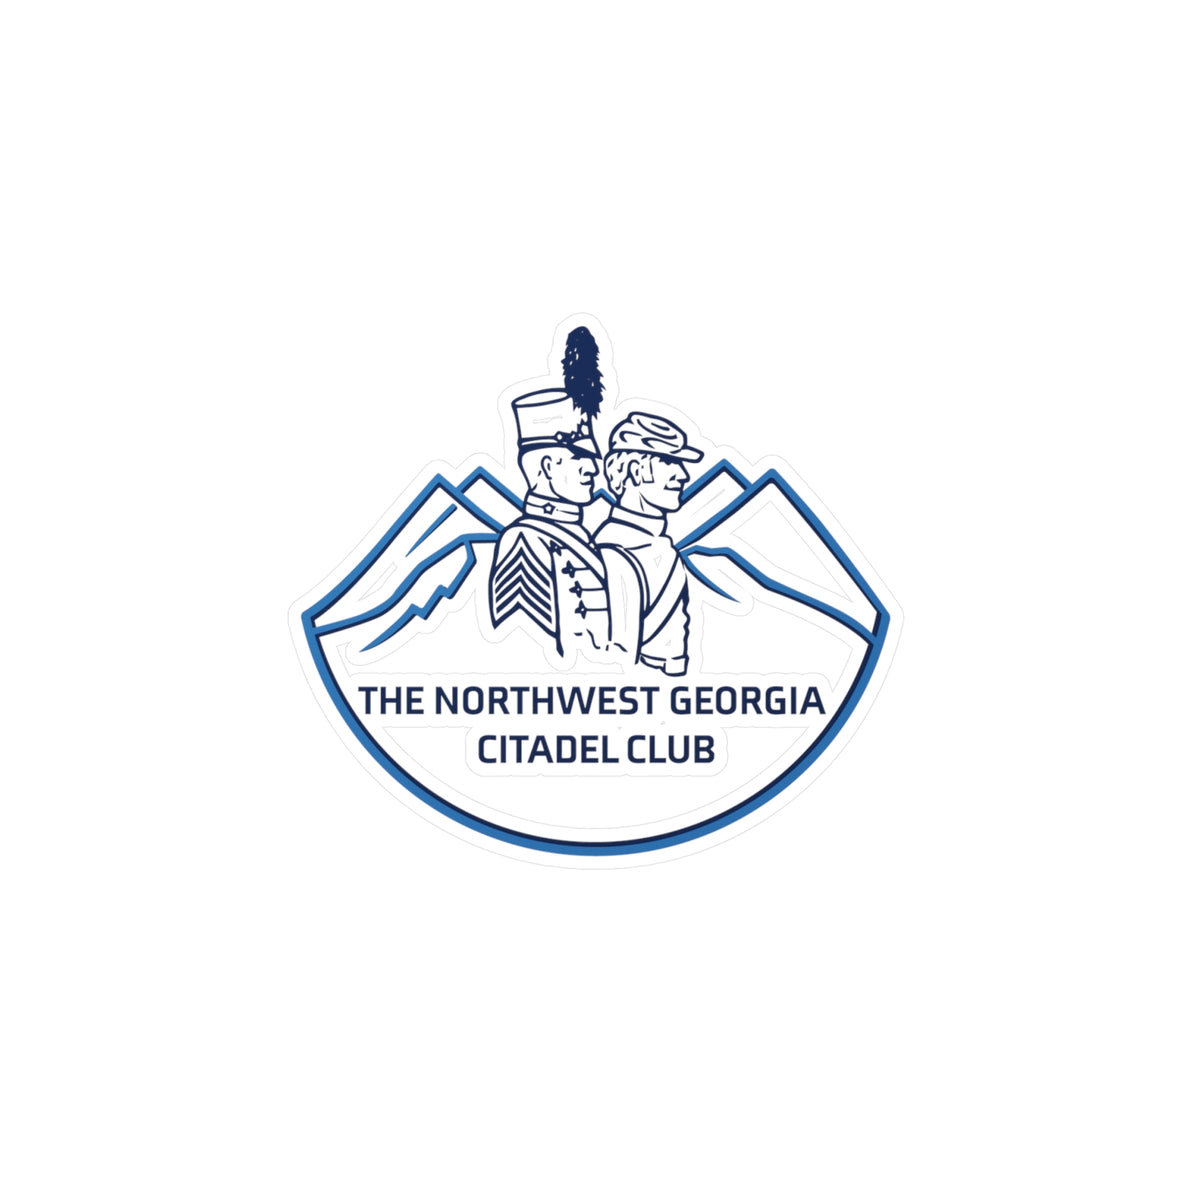 The Citadel, Alumni Club, The Northwest Georgia, Transparent Outdoor Stickers, Kiss-Cut Vinyl Decals